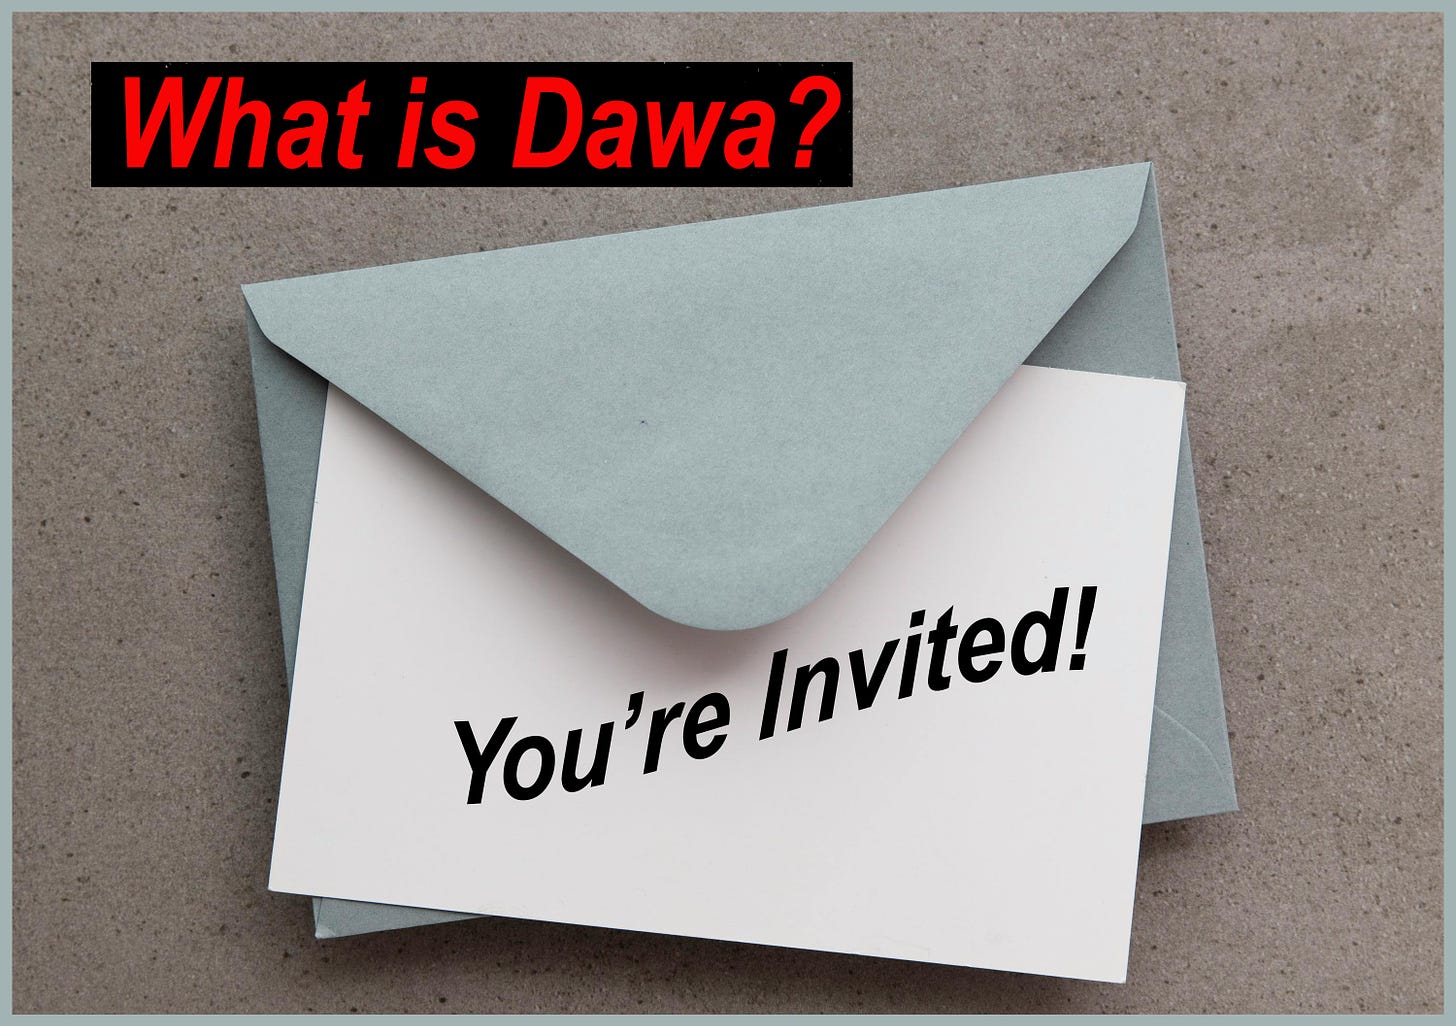 invitation card to a dawa event